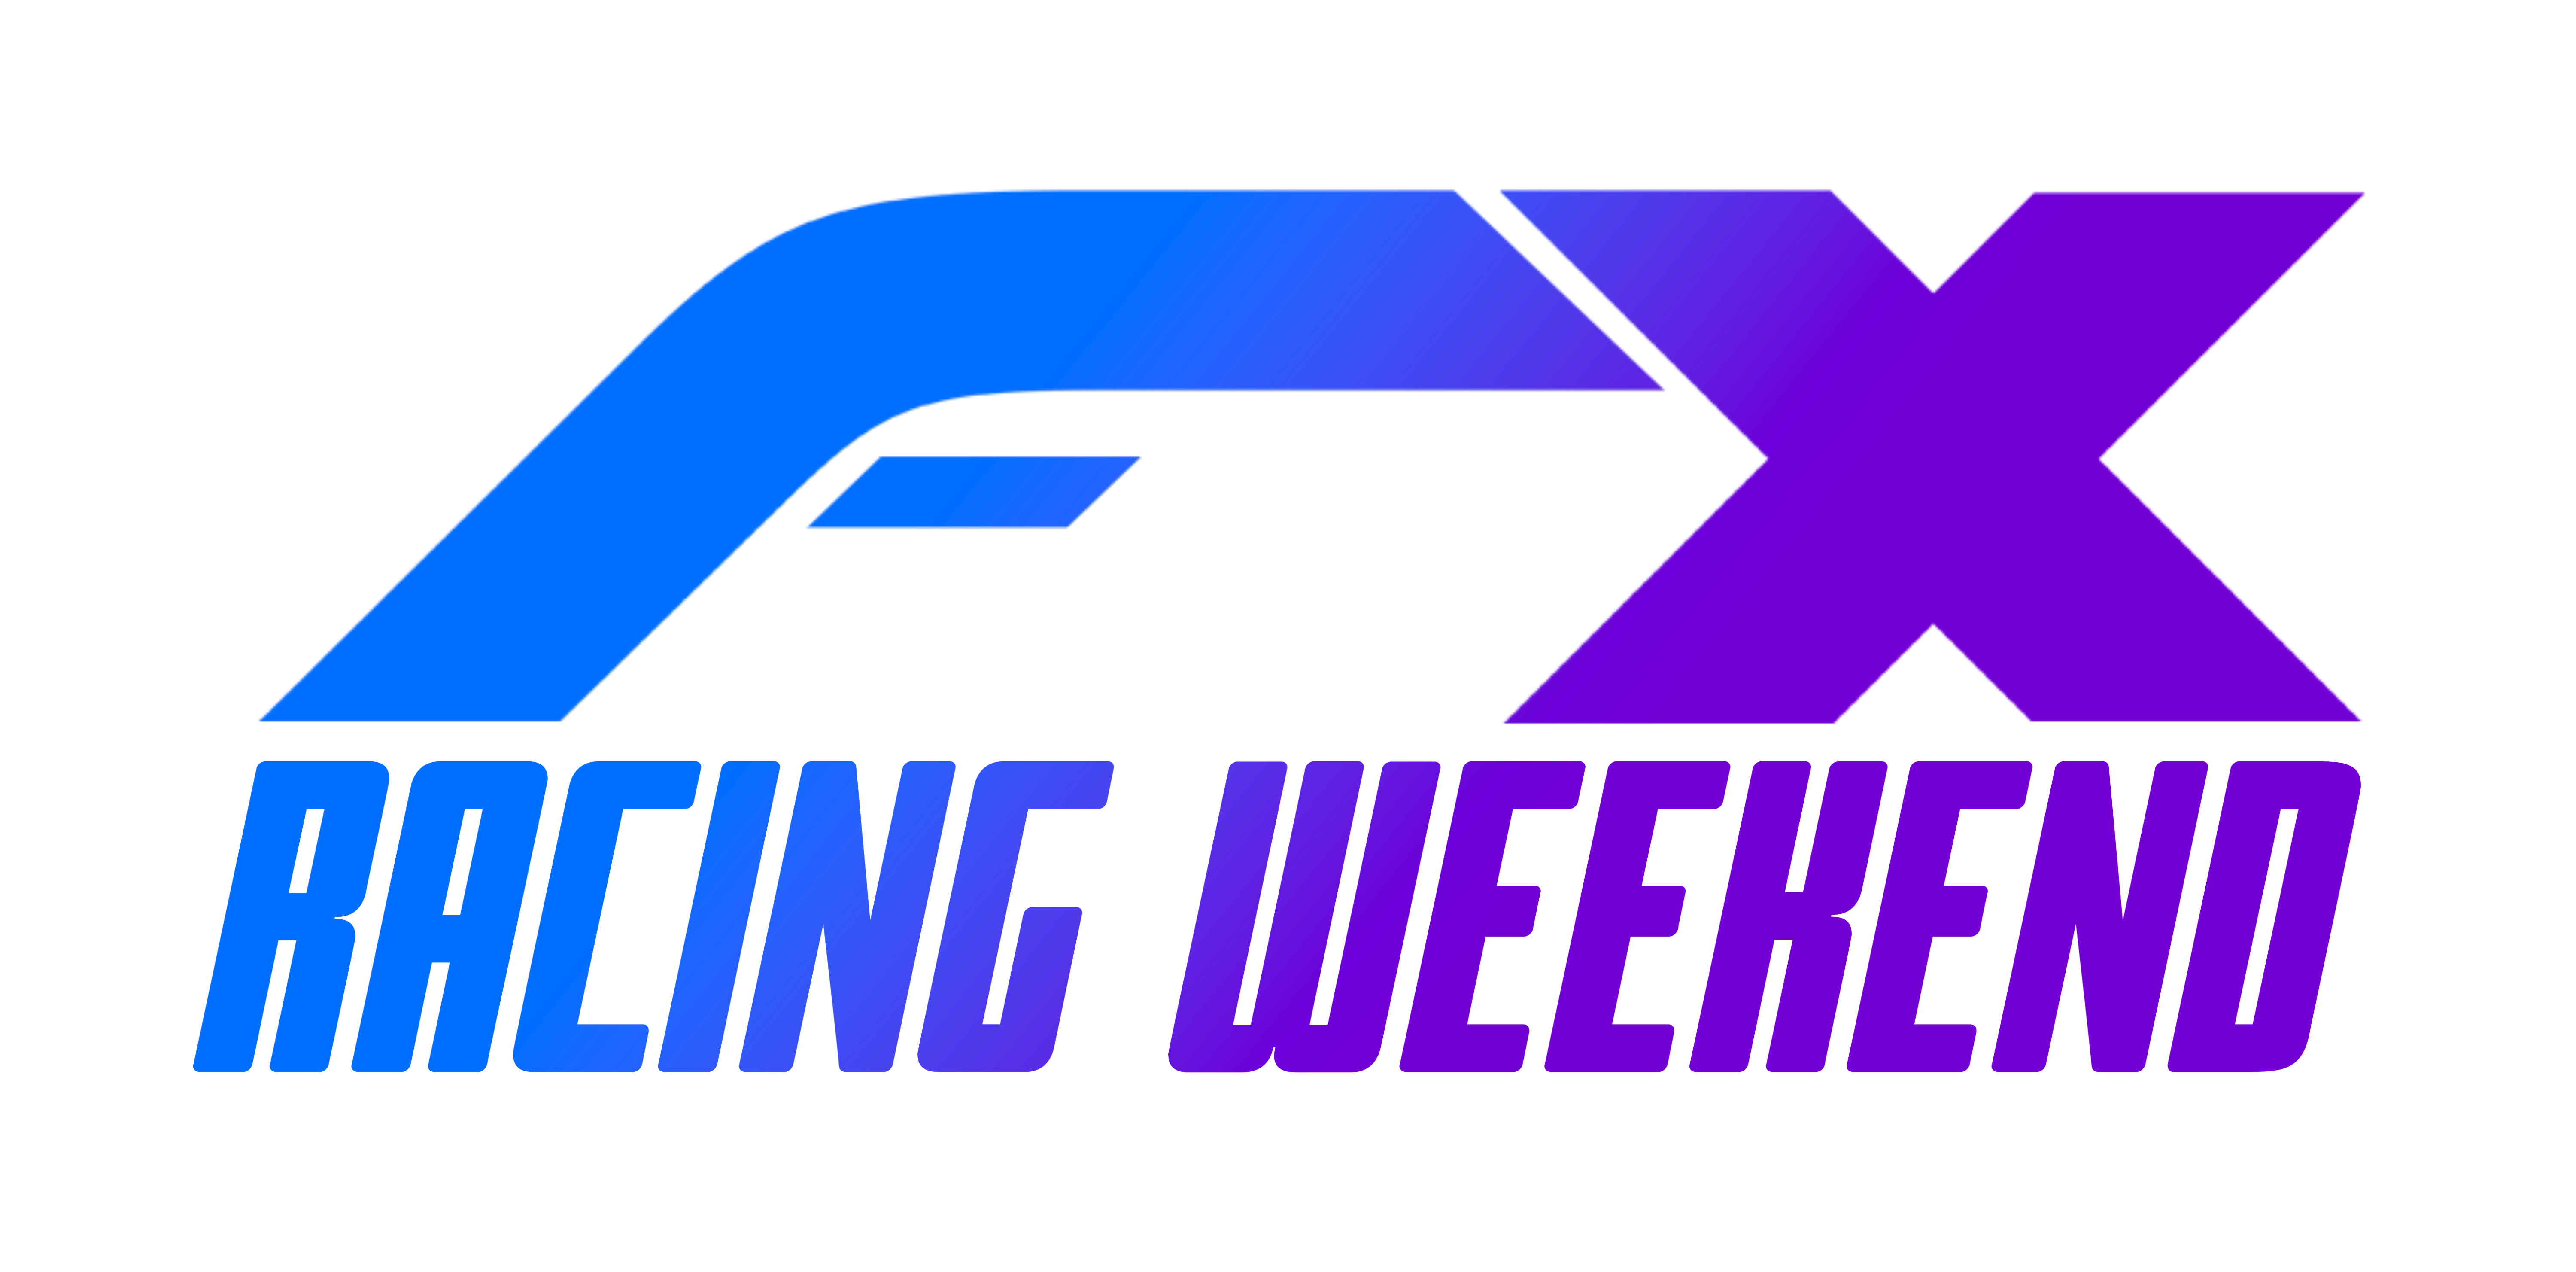 fx racing logo